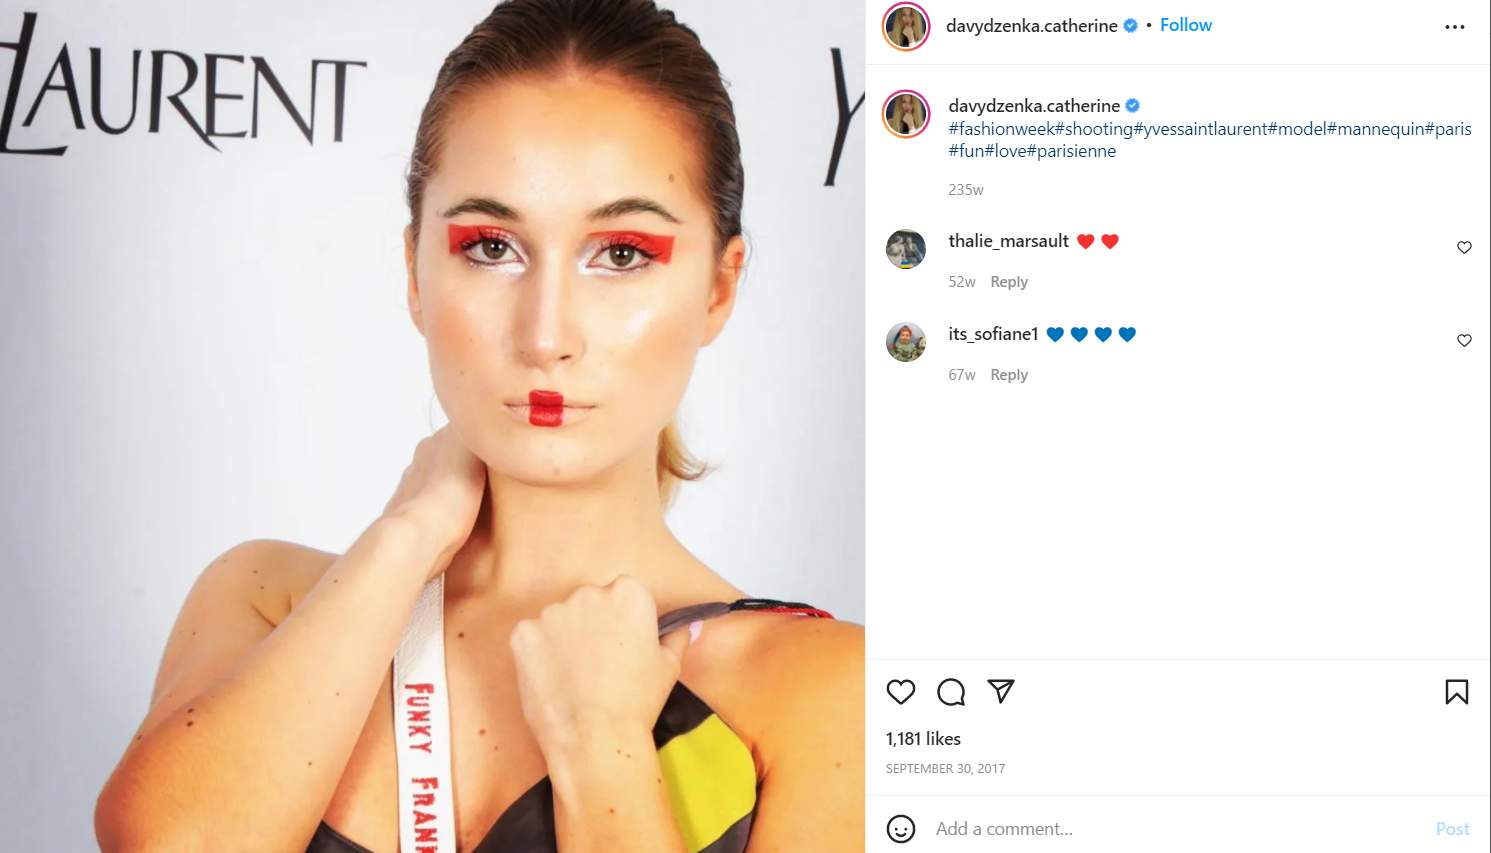 The first photo of Catherine Davydzenka on Instagram